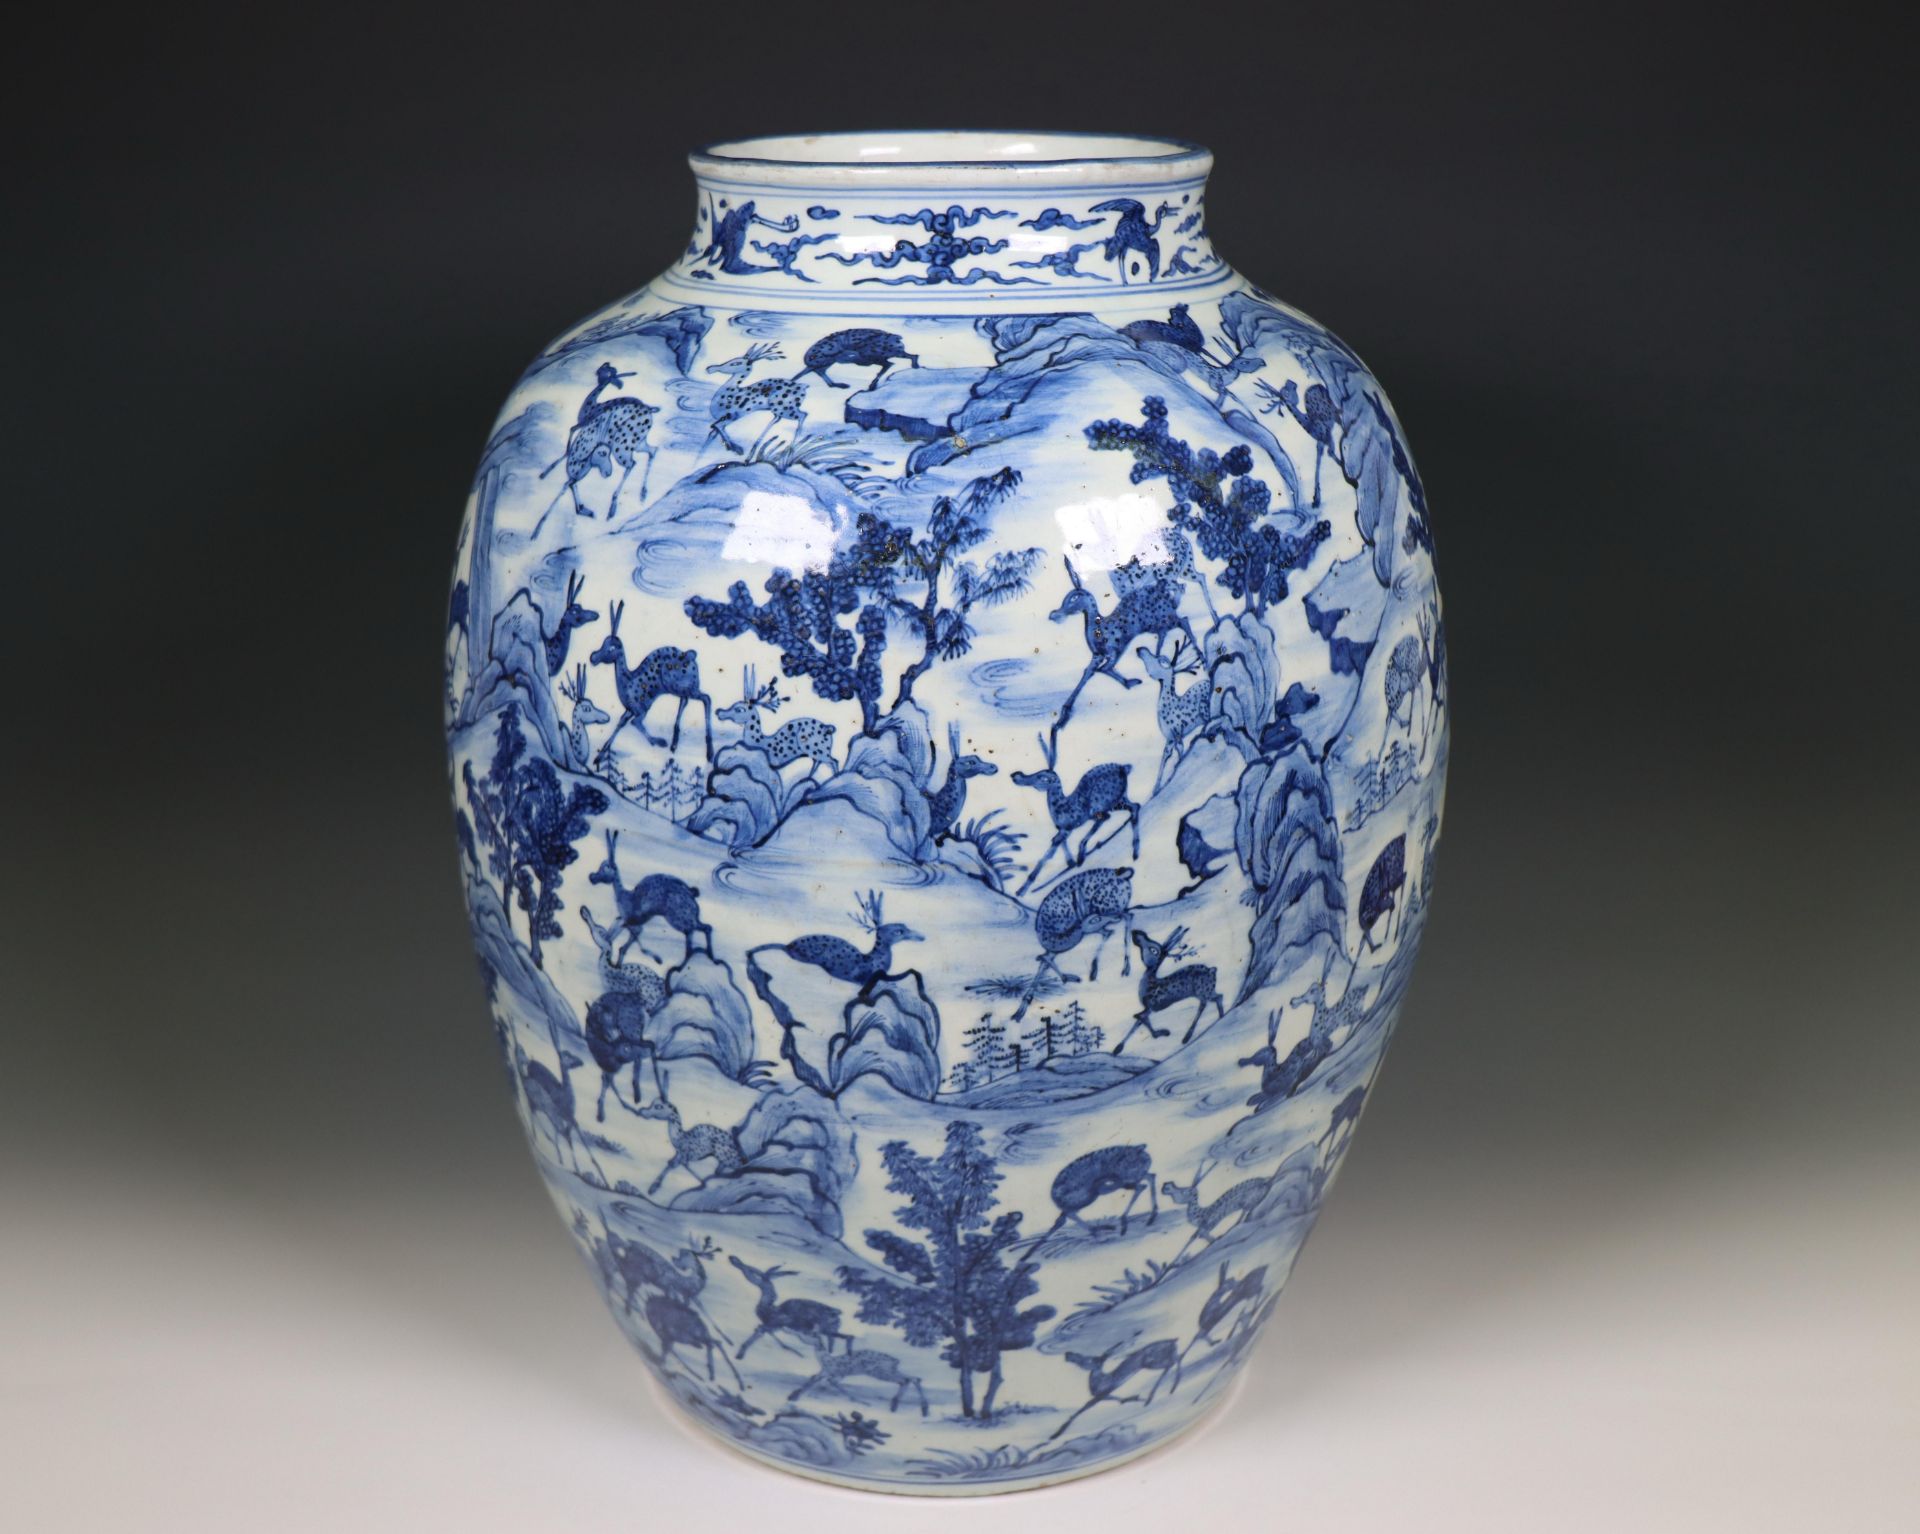 China, blue and white porcelain 'one hundred deer' baluster vase, late Qing dynasty (1644-1912),